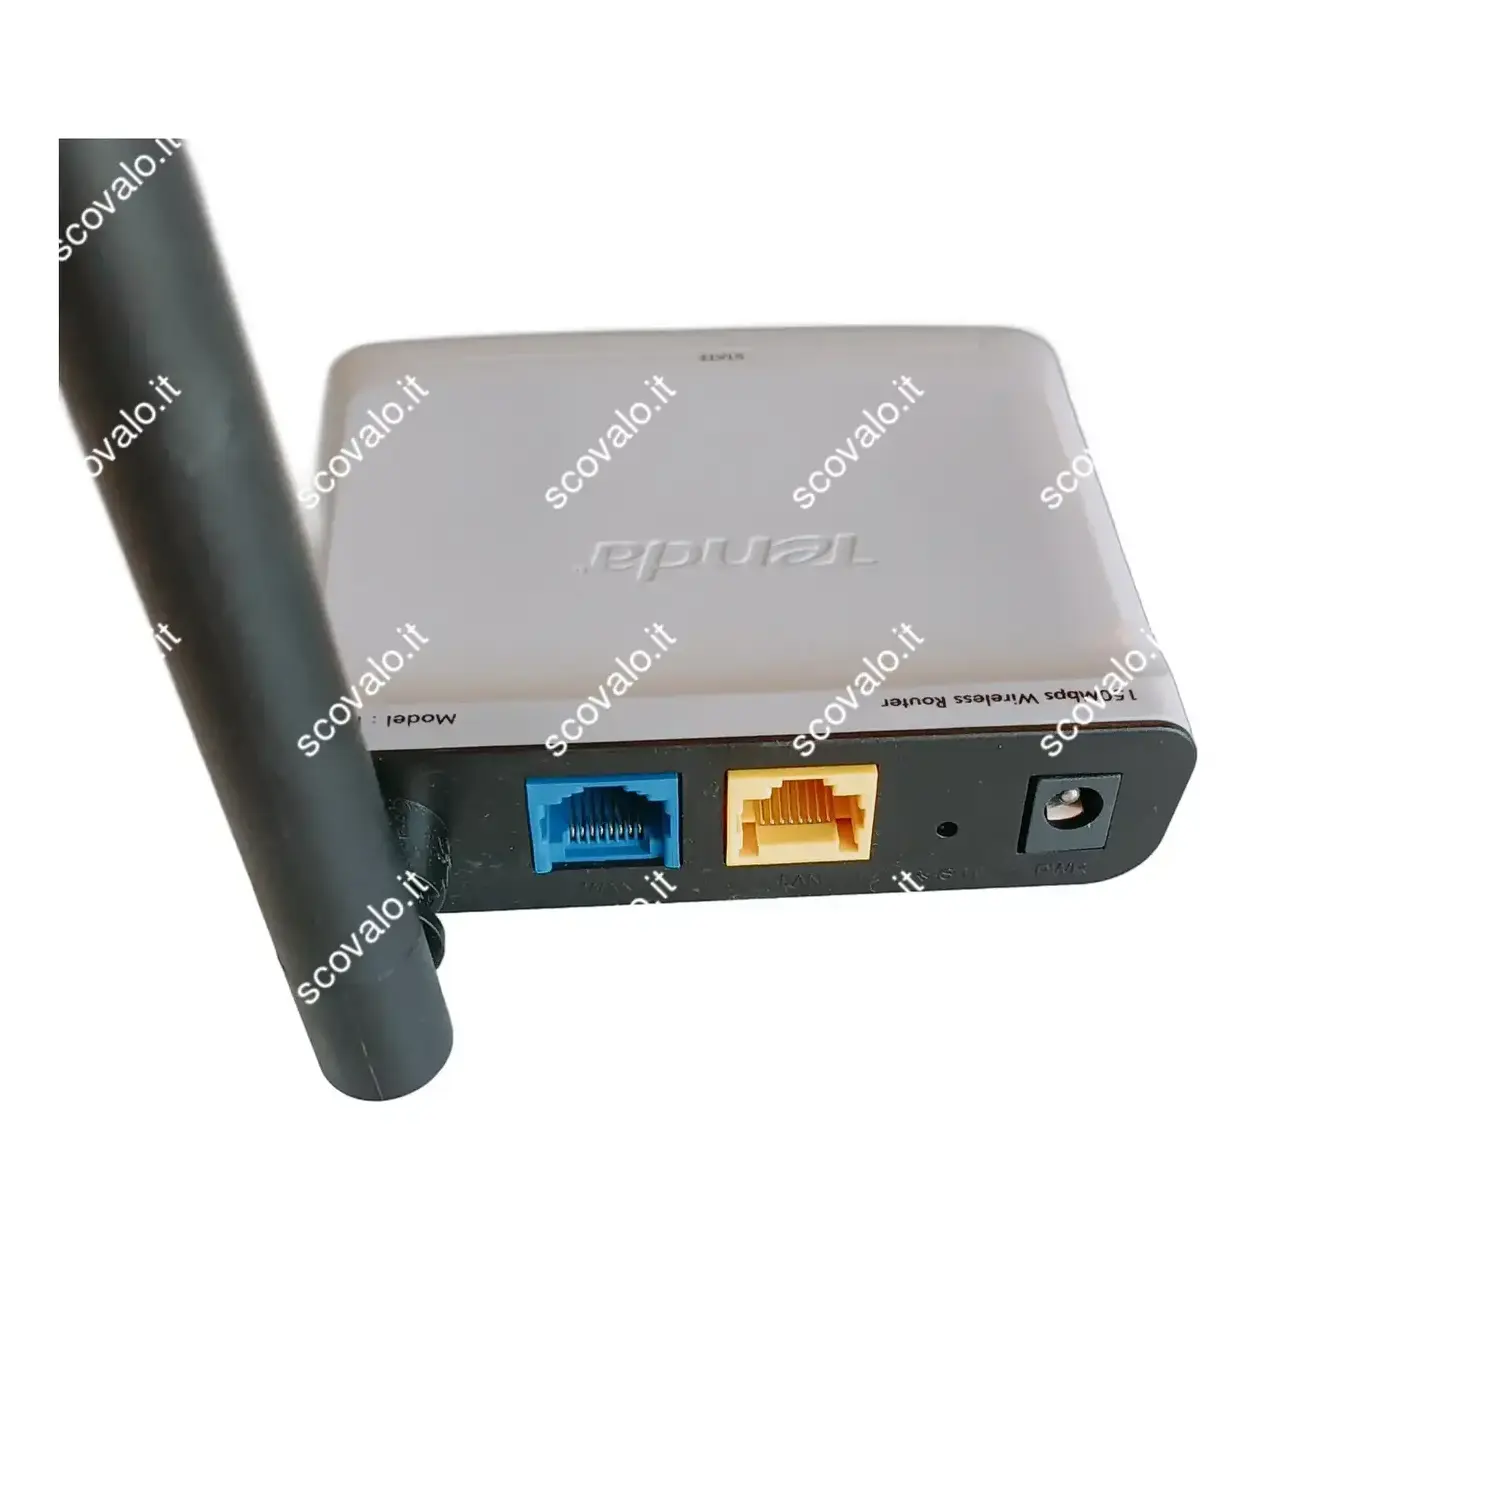 immagine wireless n router 150mbps extender tenda n3